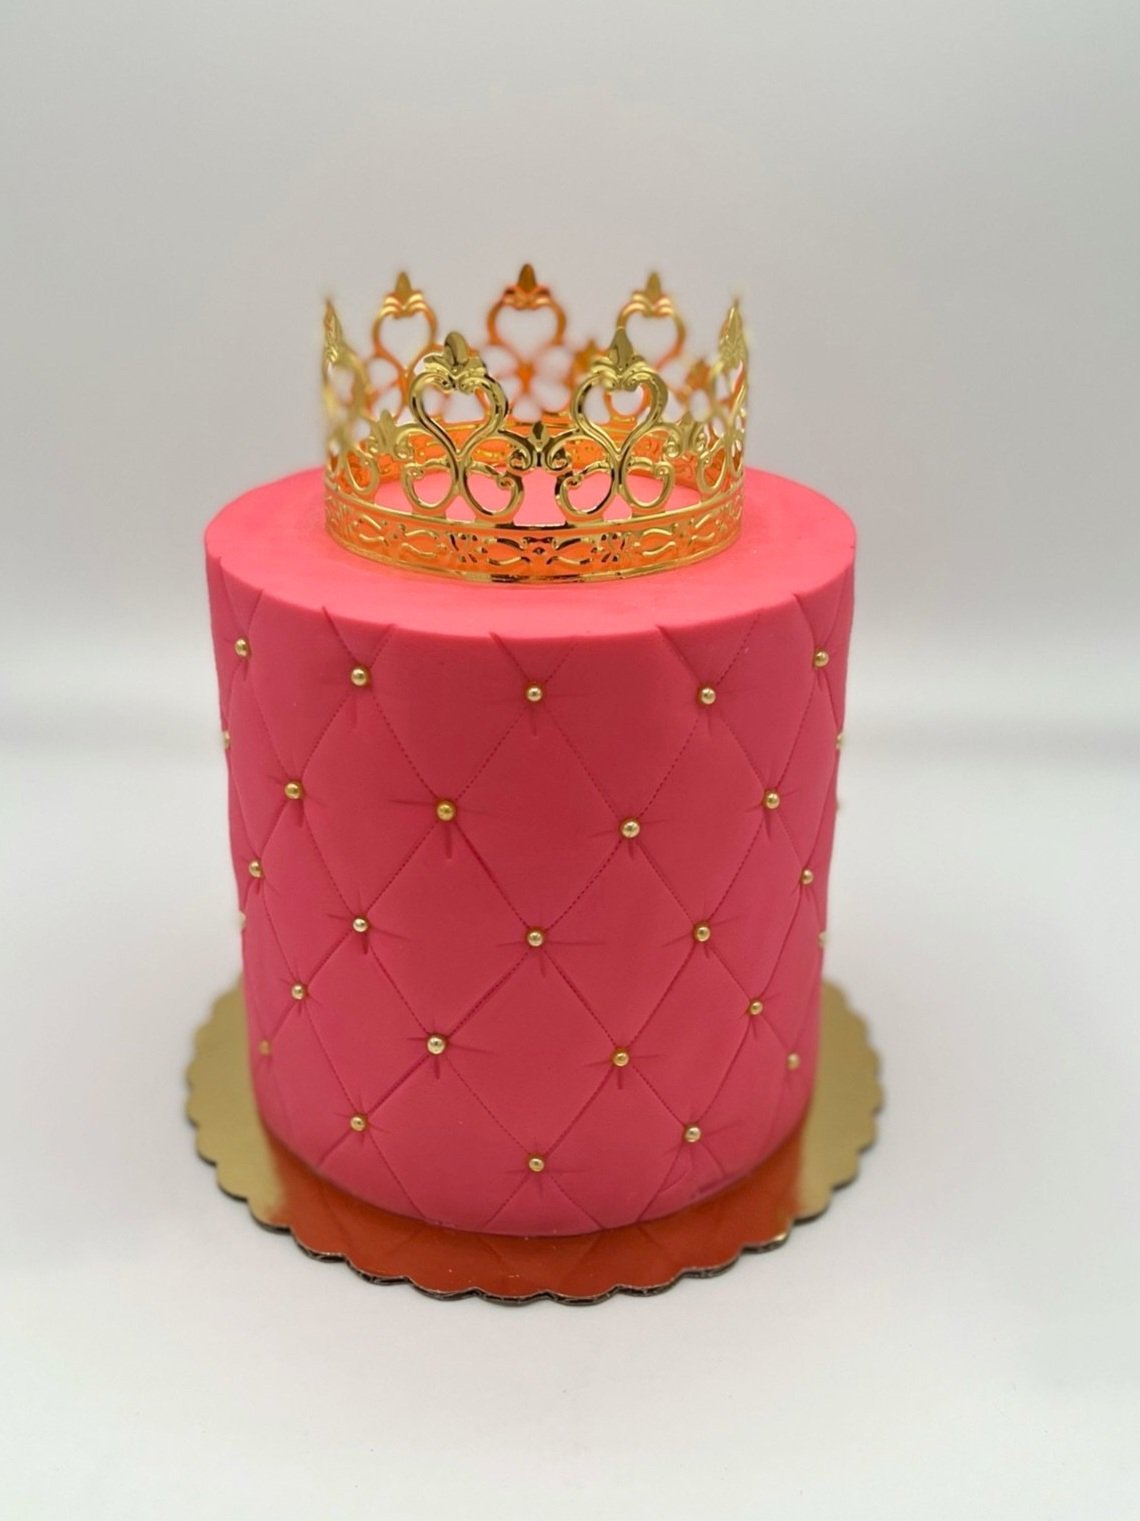 Queen Cake Design Images (Queen Birthday Cake Ideas) | Queens birthday cake,  Elegant birthday cakes, Wedding cake red